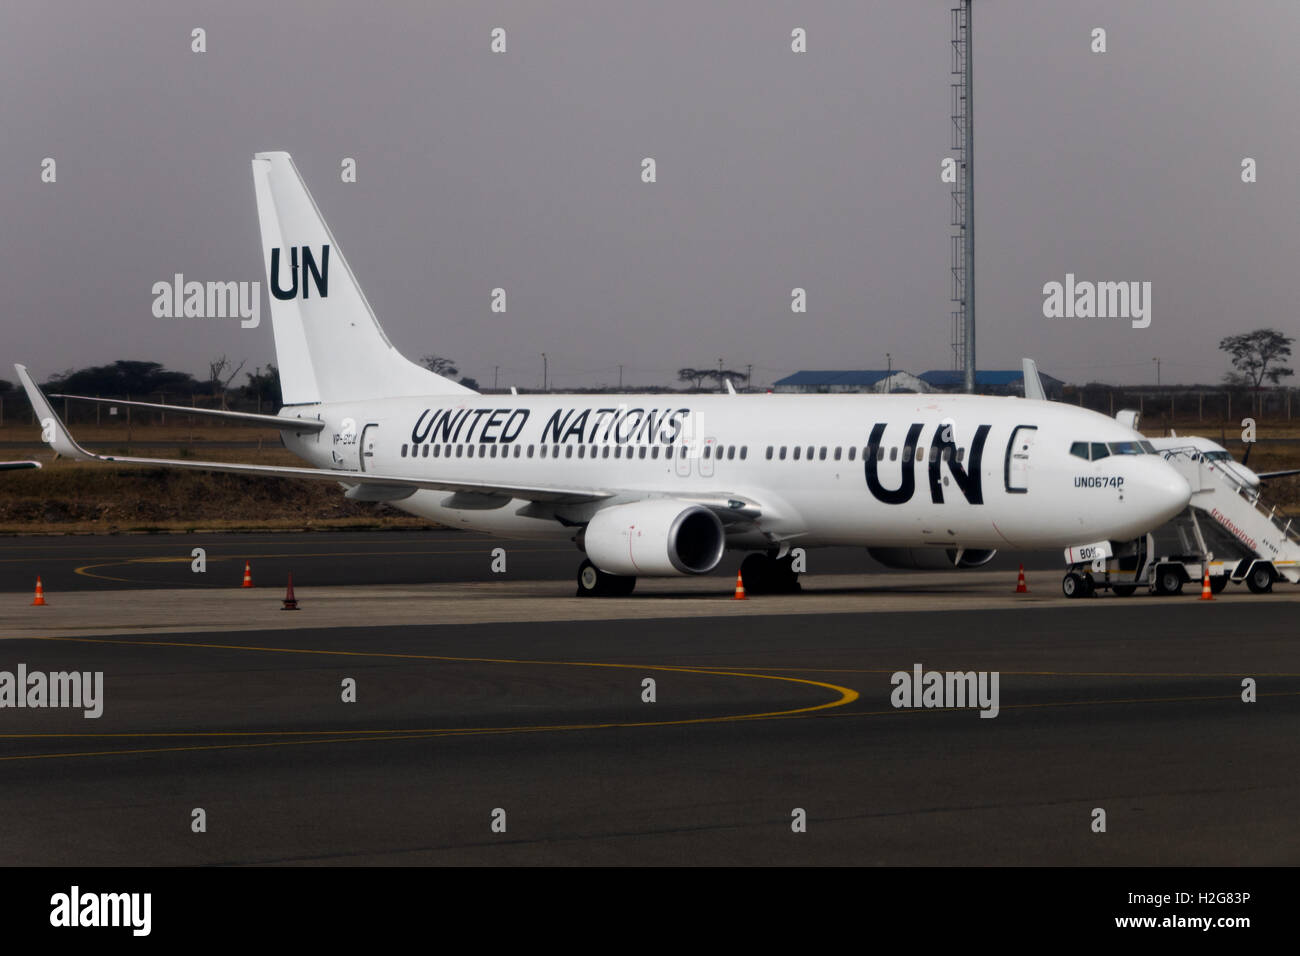 a United Nations Boeing 737-800 passenger jet sits parked at Nairobi's Jomo Kenyatta International Airport Stock Photo